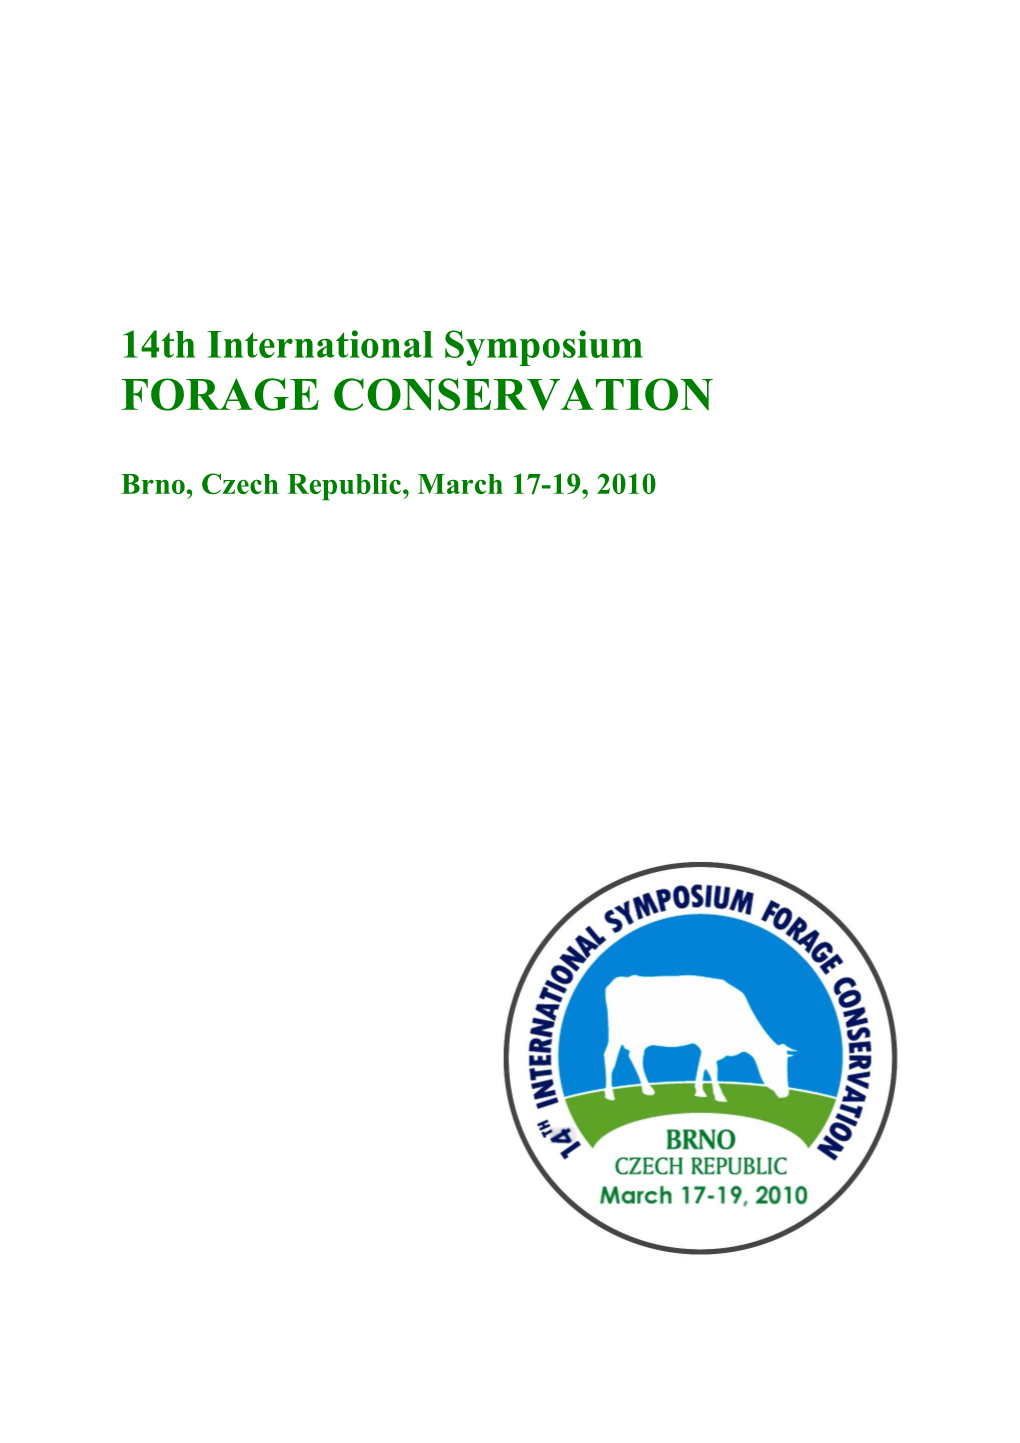 Forage Conservation